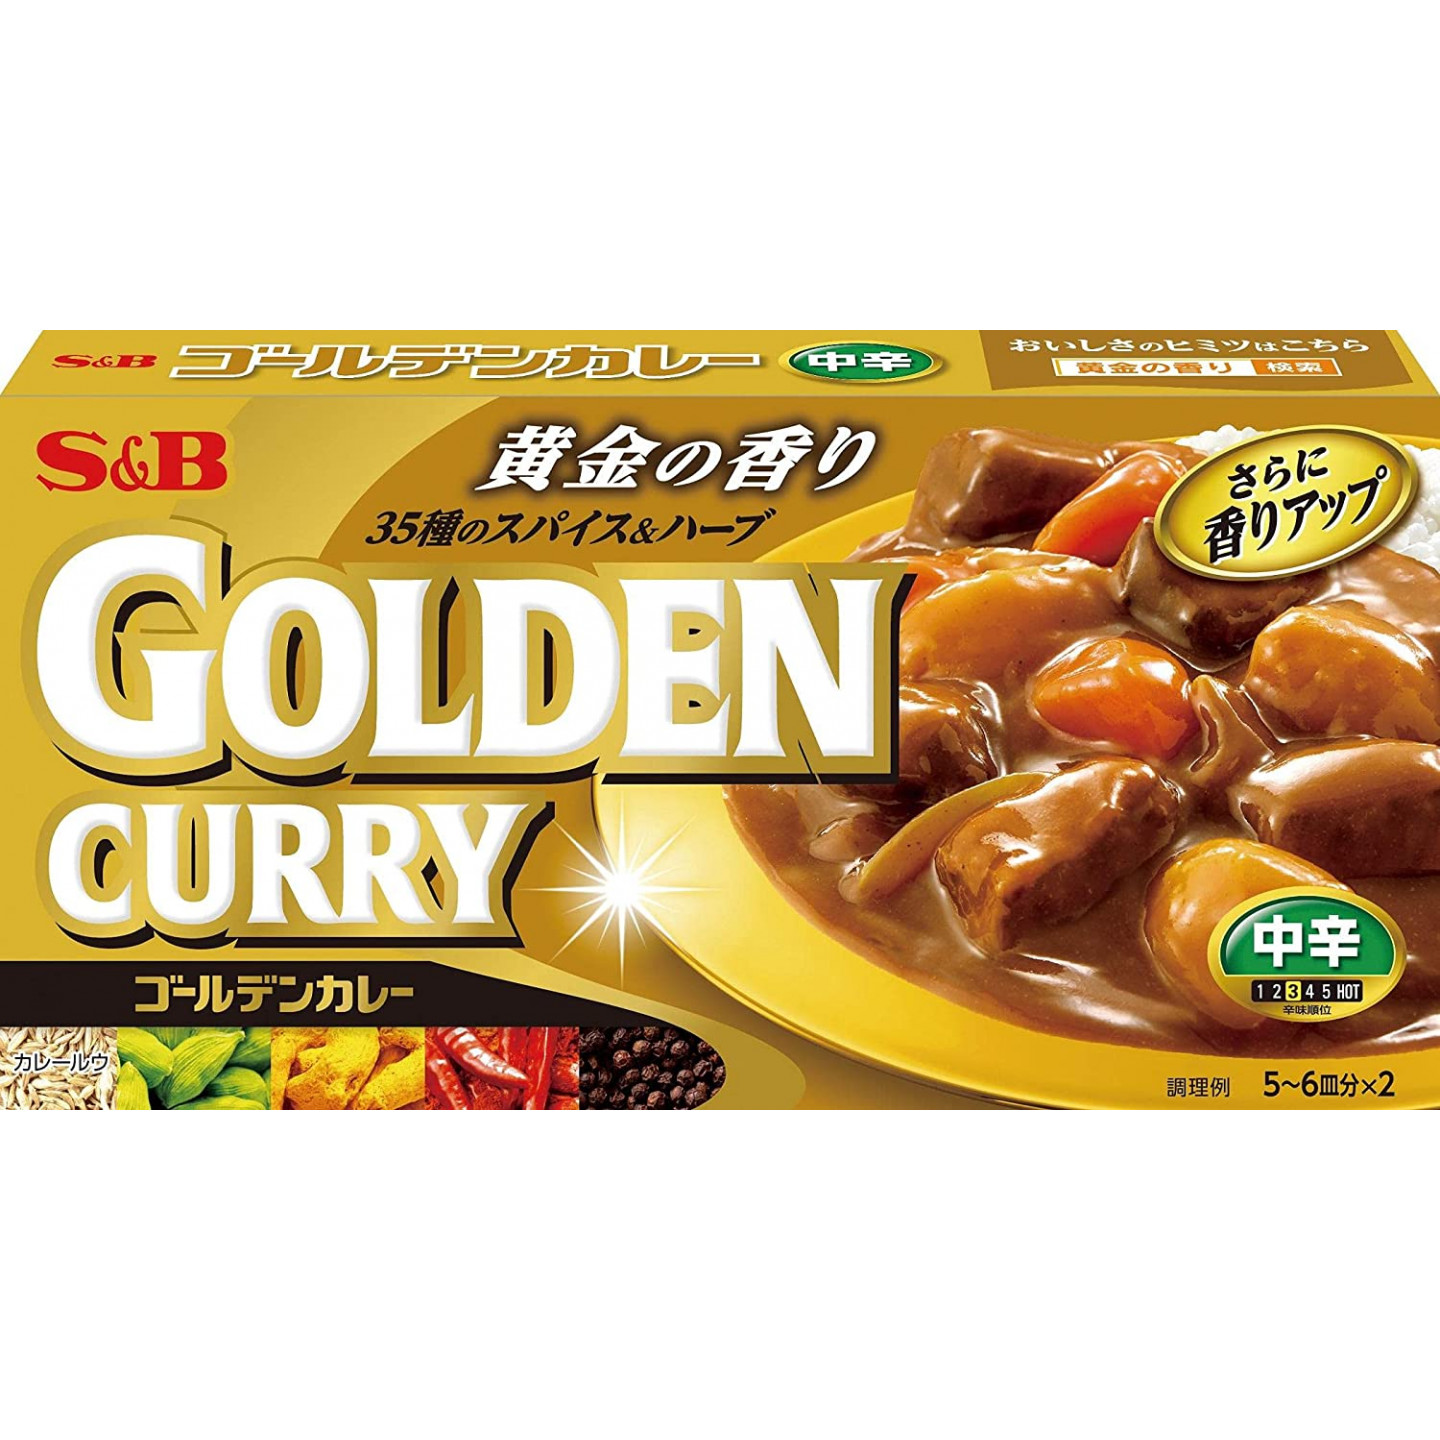 S&B - Golden Curry - Medium spicy curry cubes | Cookingsan.com